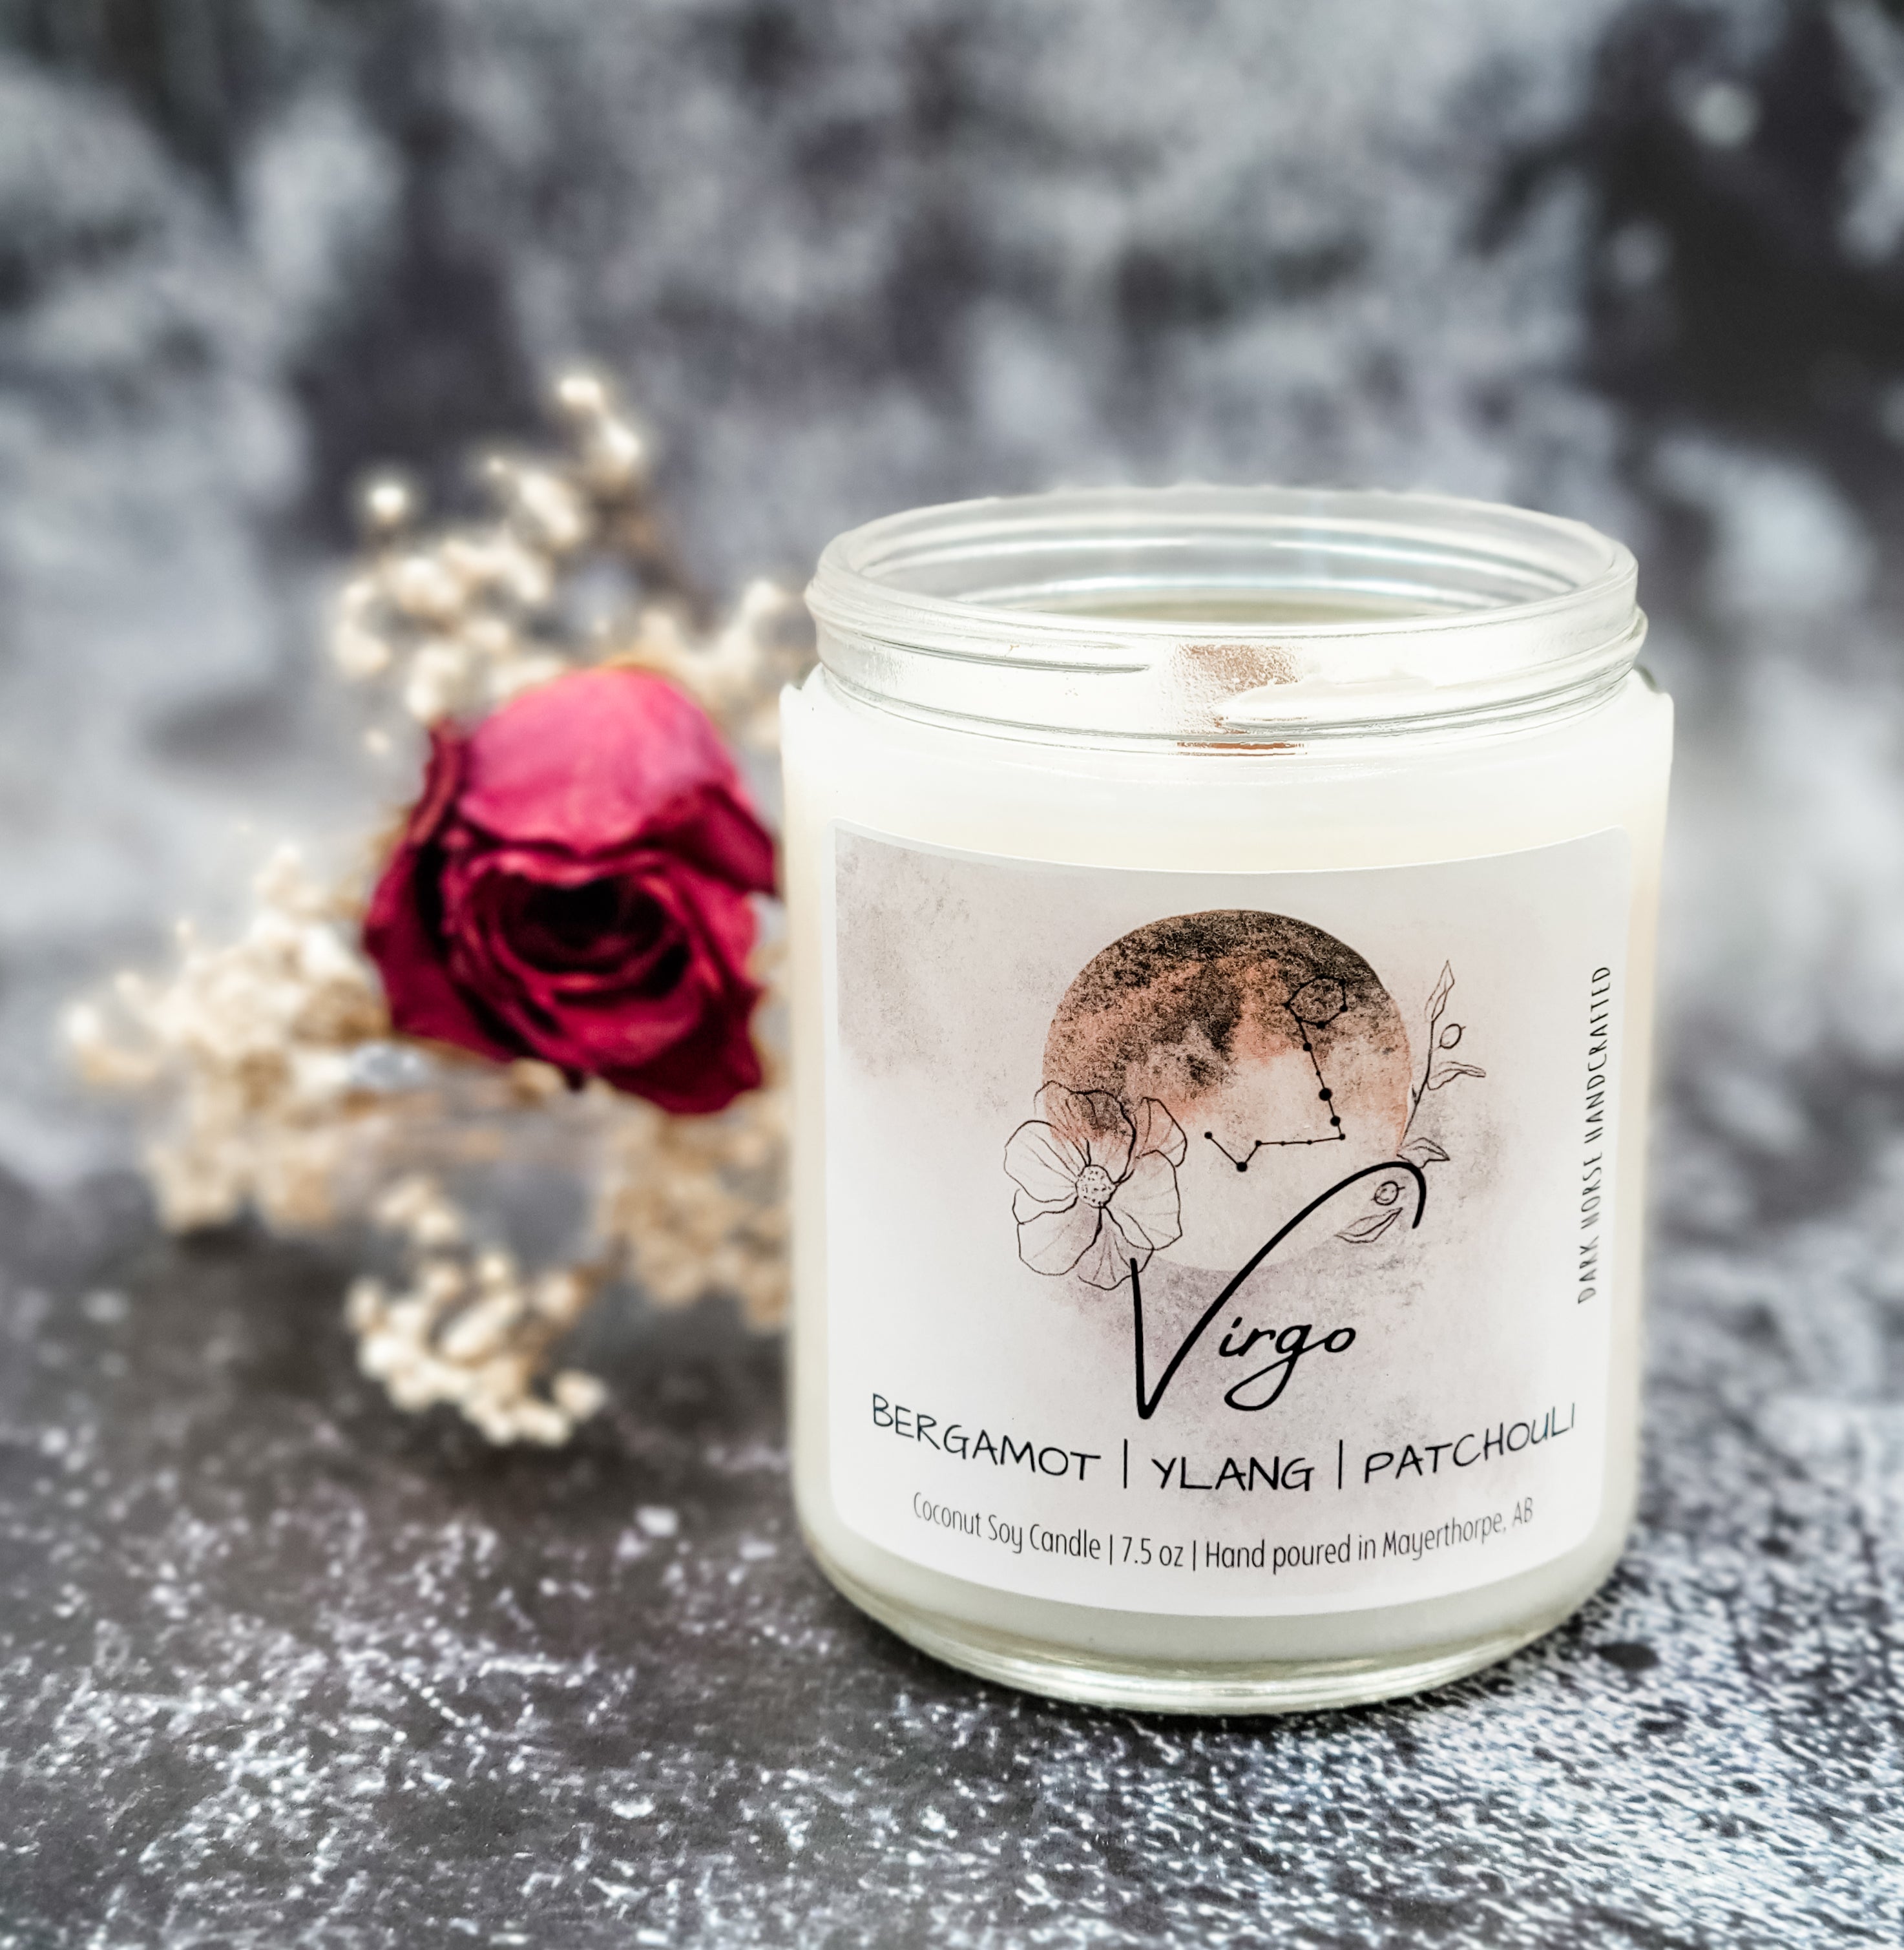 Virgo zodiac candle with wood wick